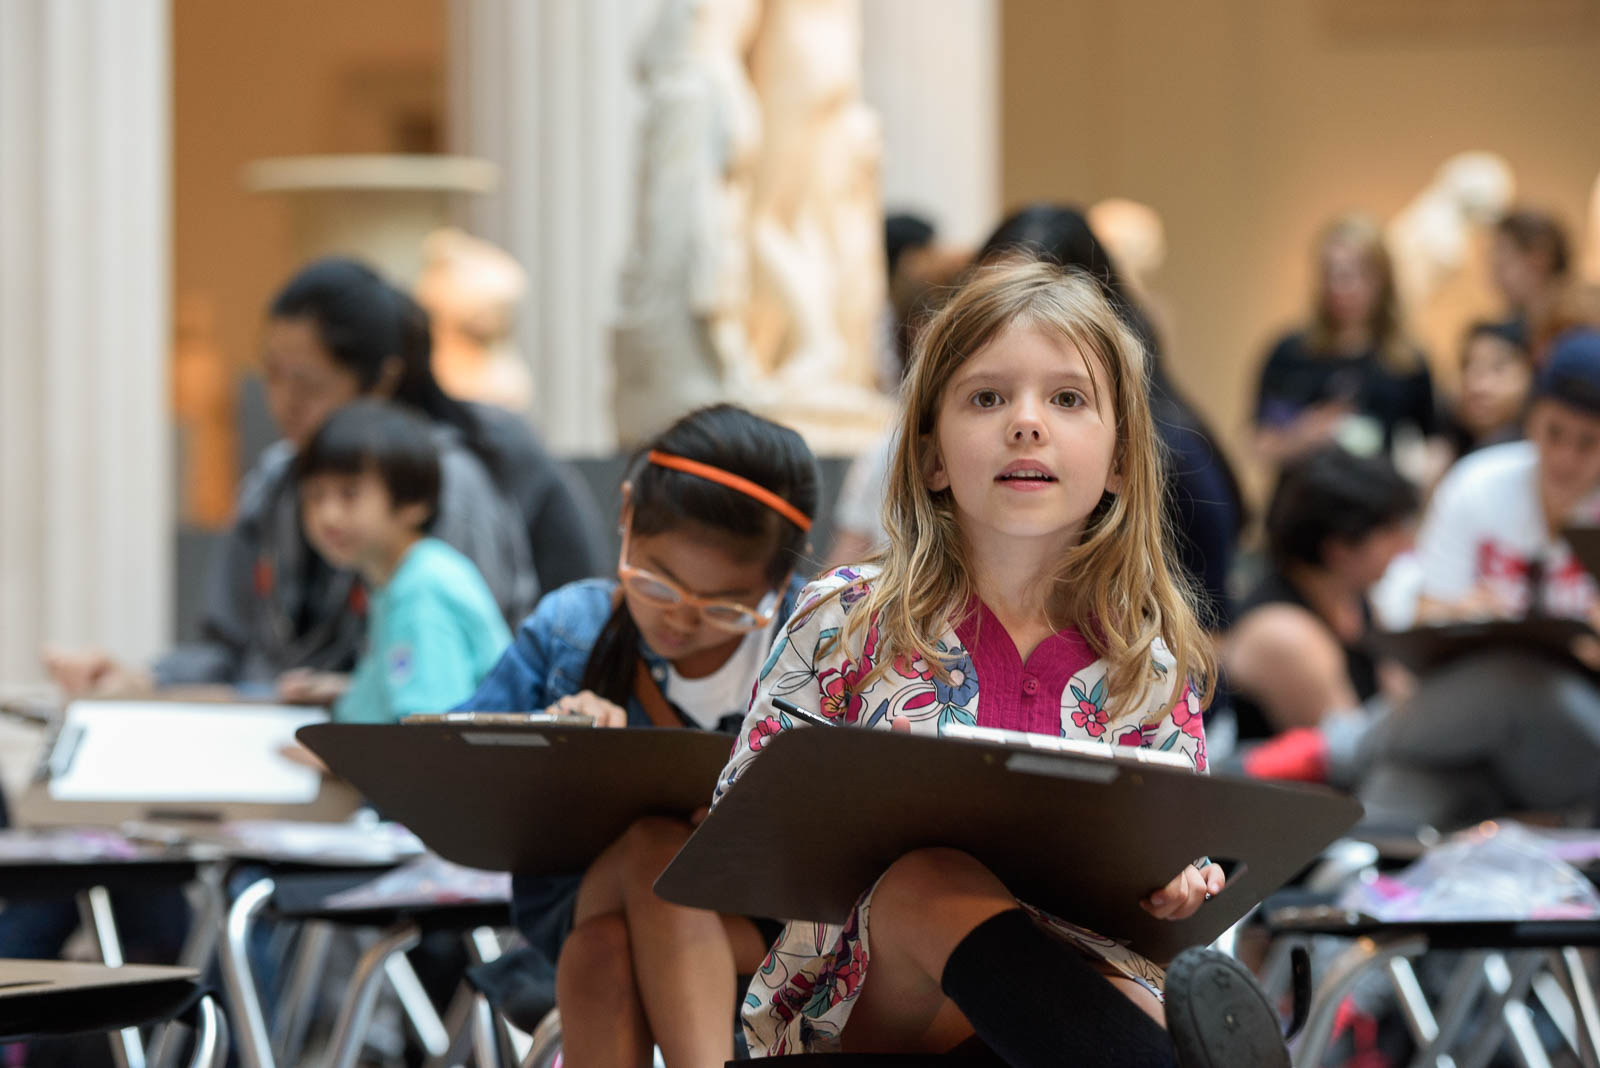 Kids drawing at The Met